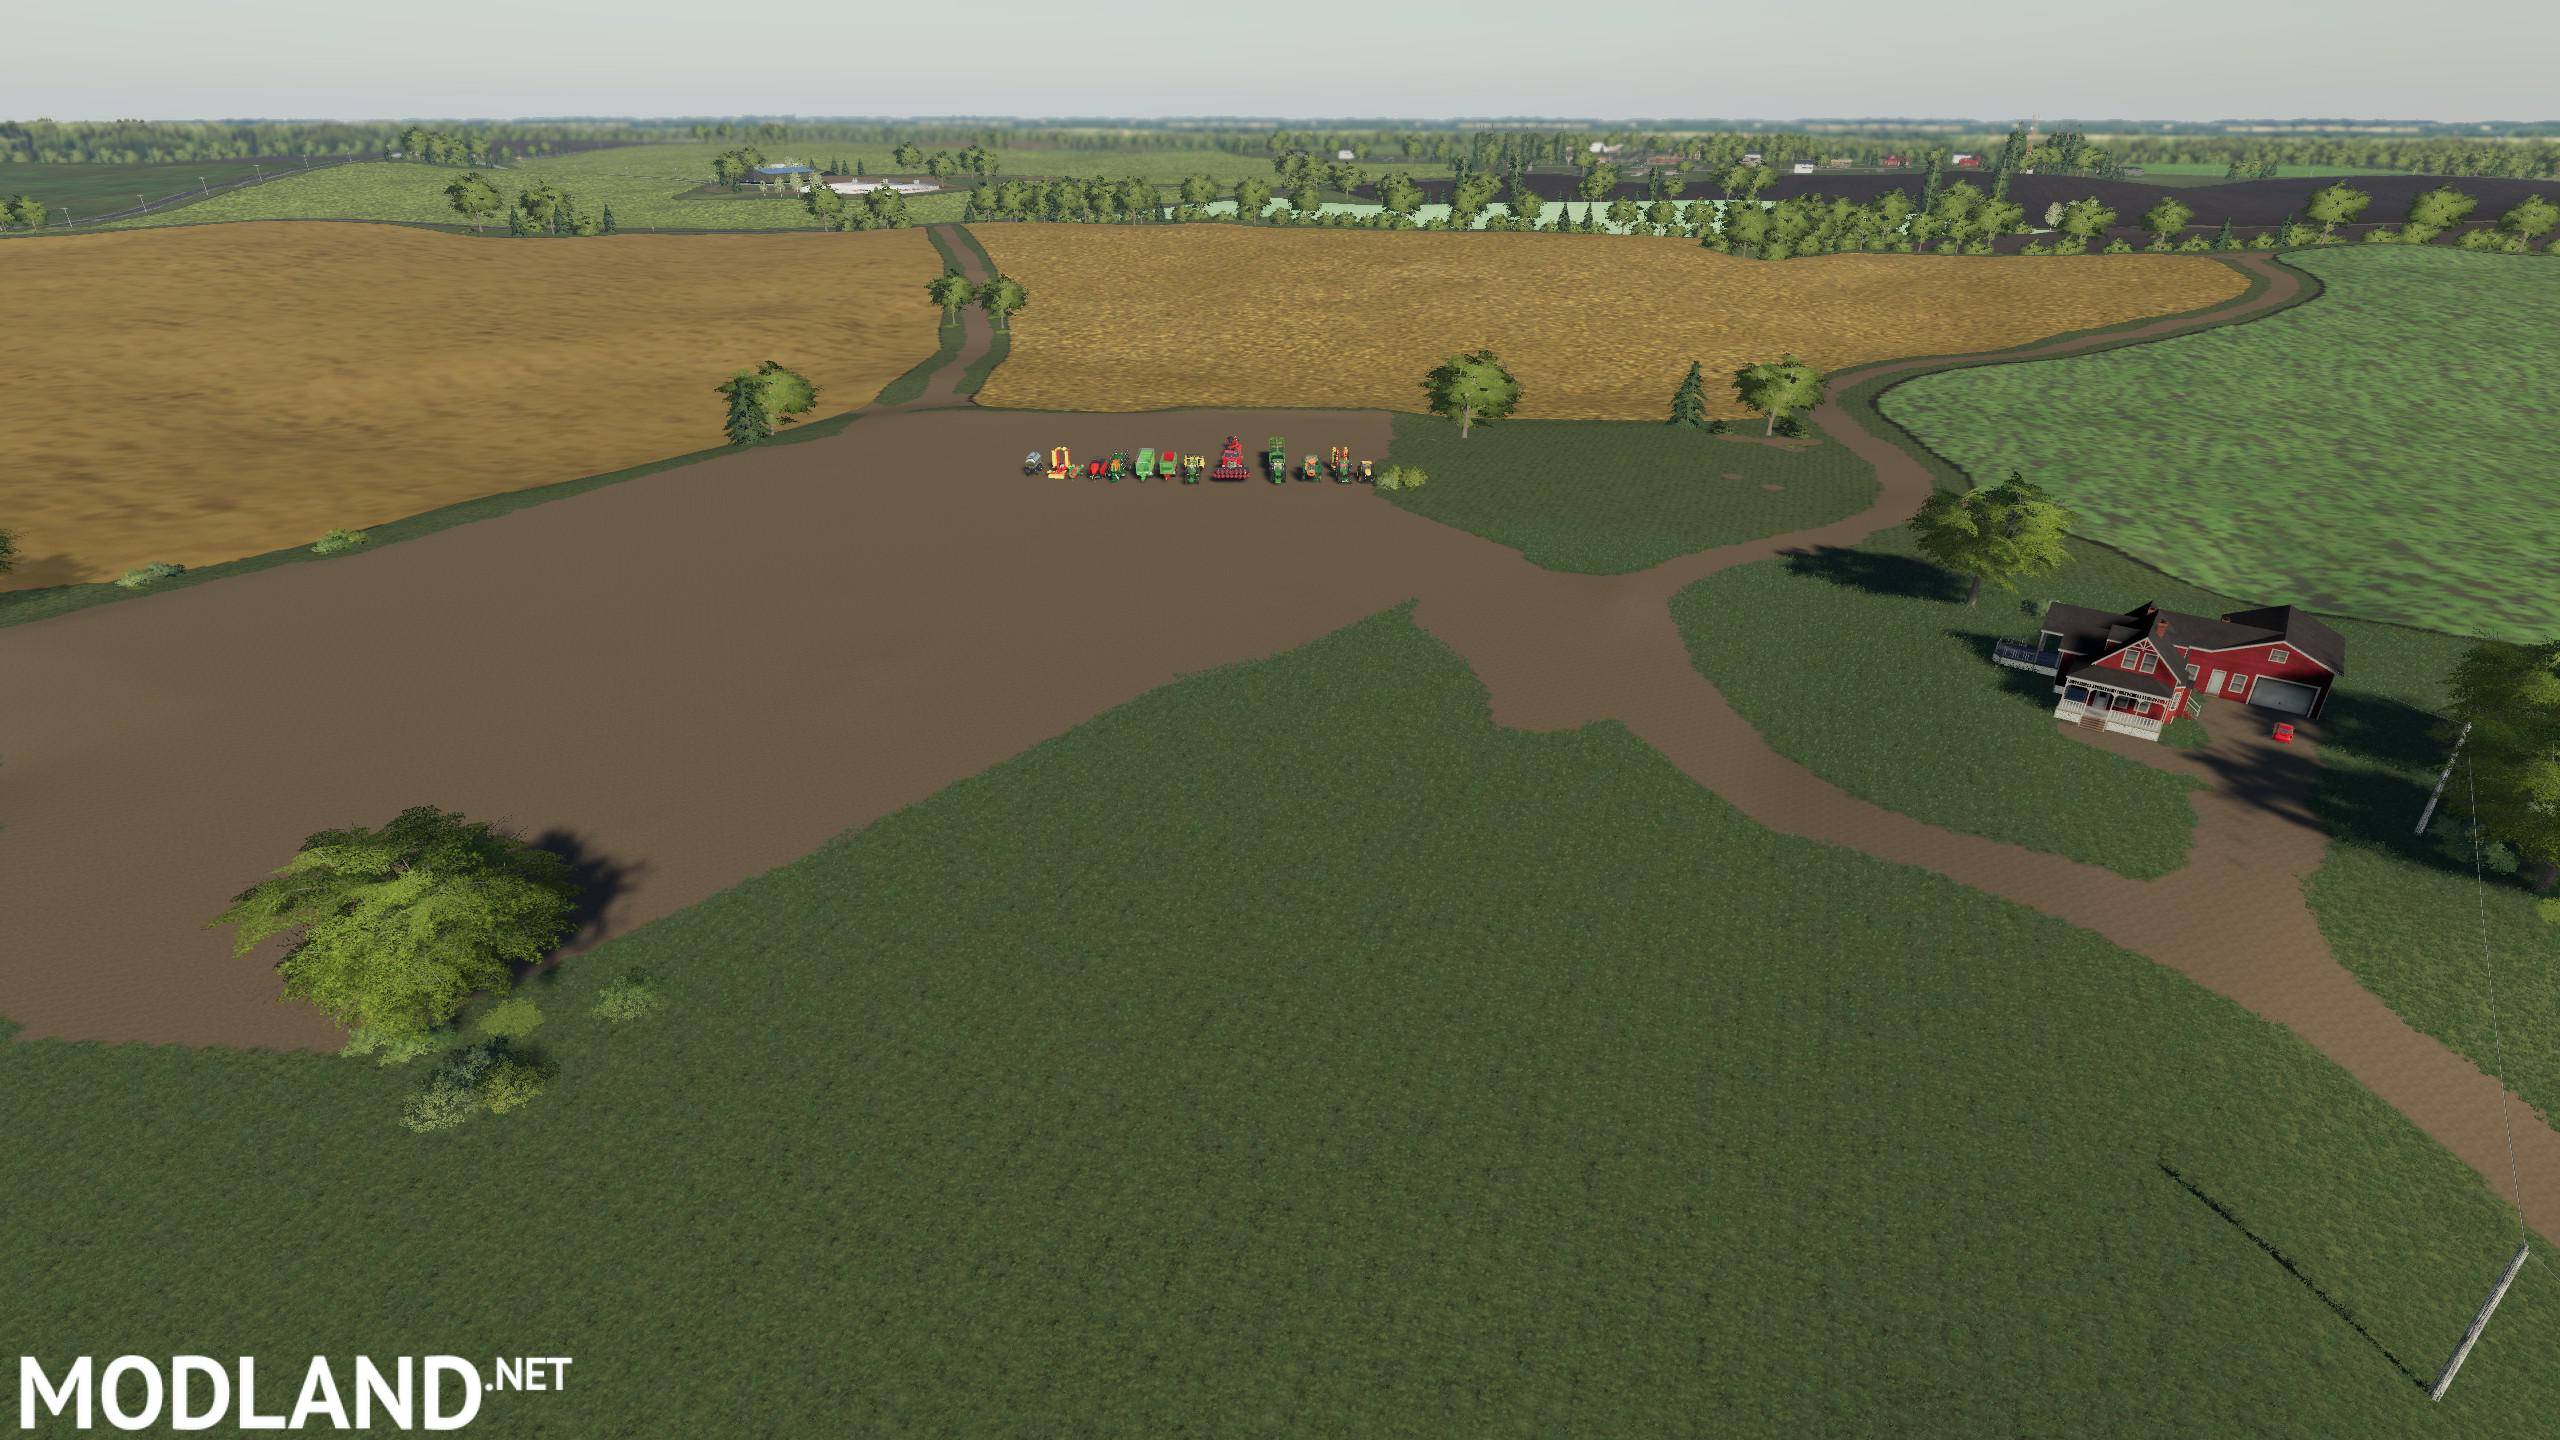 Clover Creek Map v⅒ 0.0.0.11 in Fs 23, Farming simulator 23 Apk